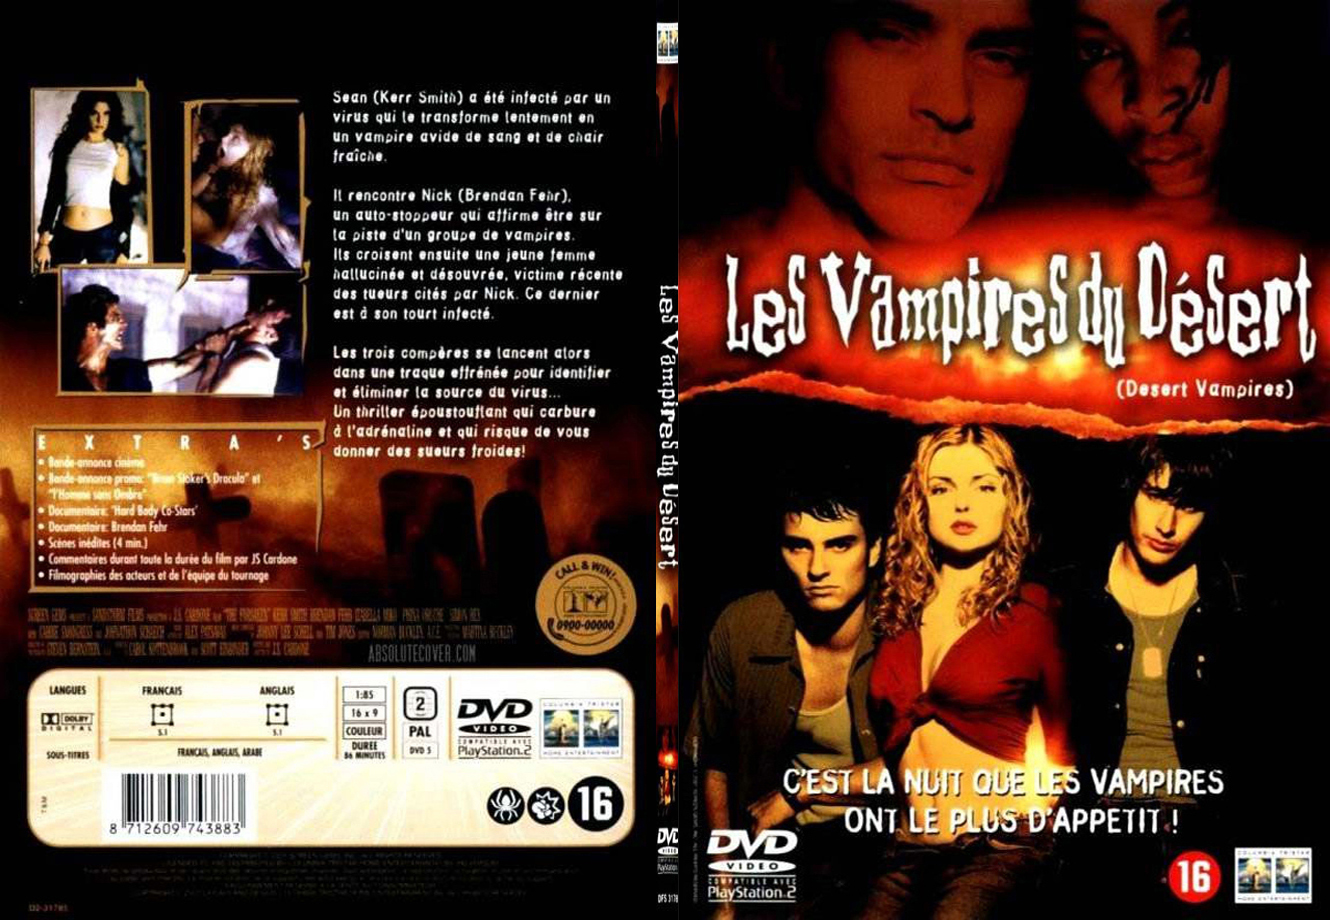 Jaquette DVD Les vampires du dsert - SLIM